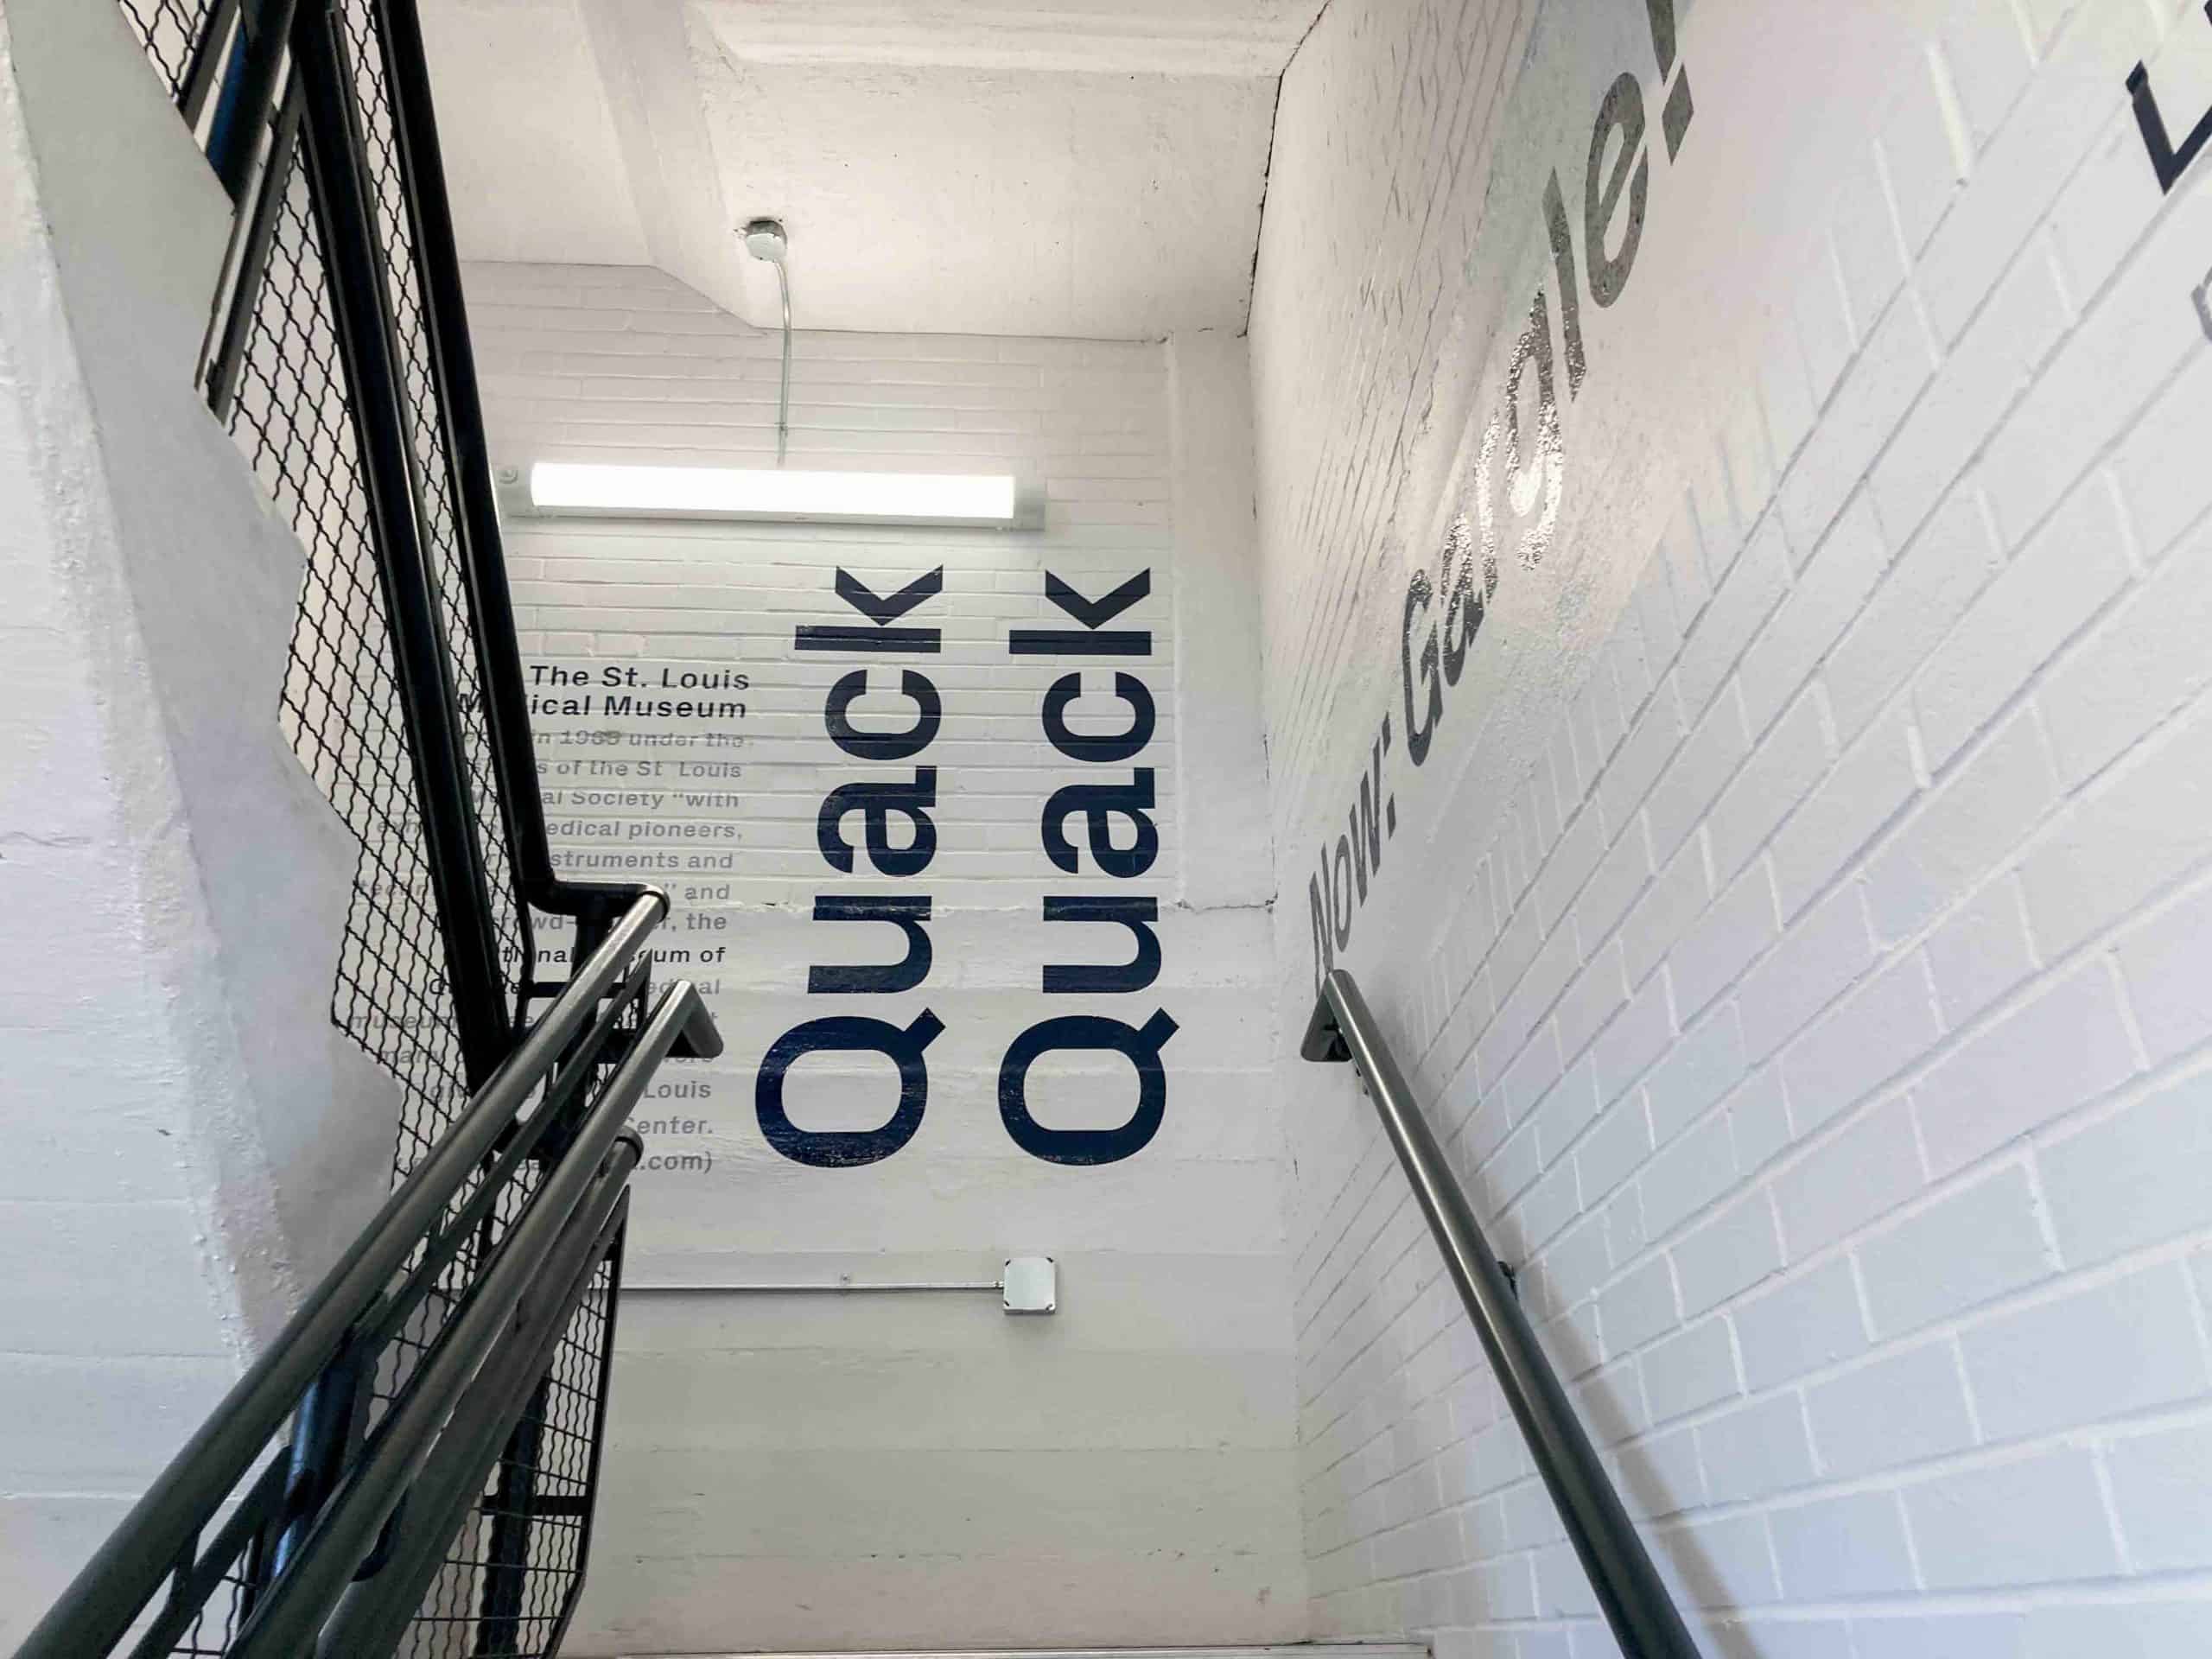 Vinyl graphics on stair walls that say quack quack